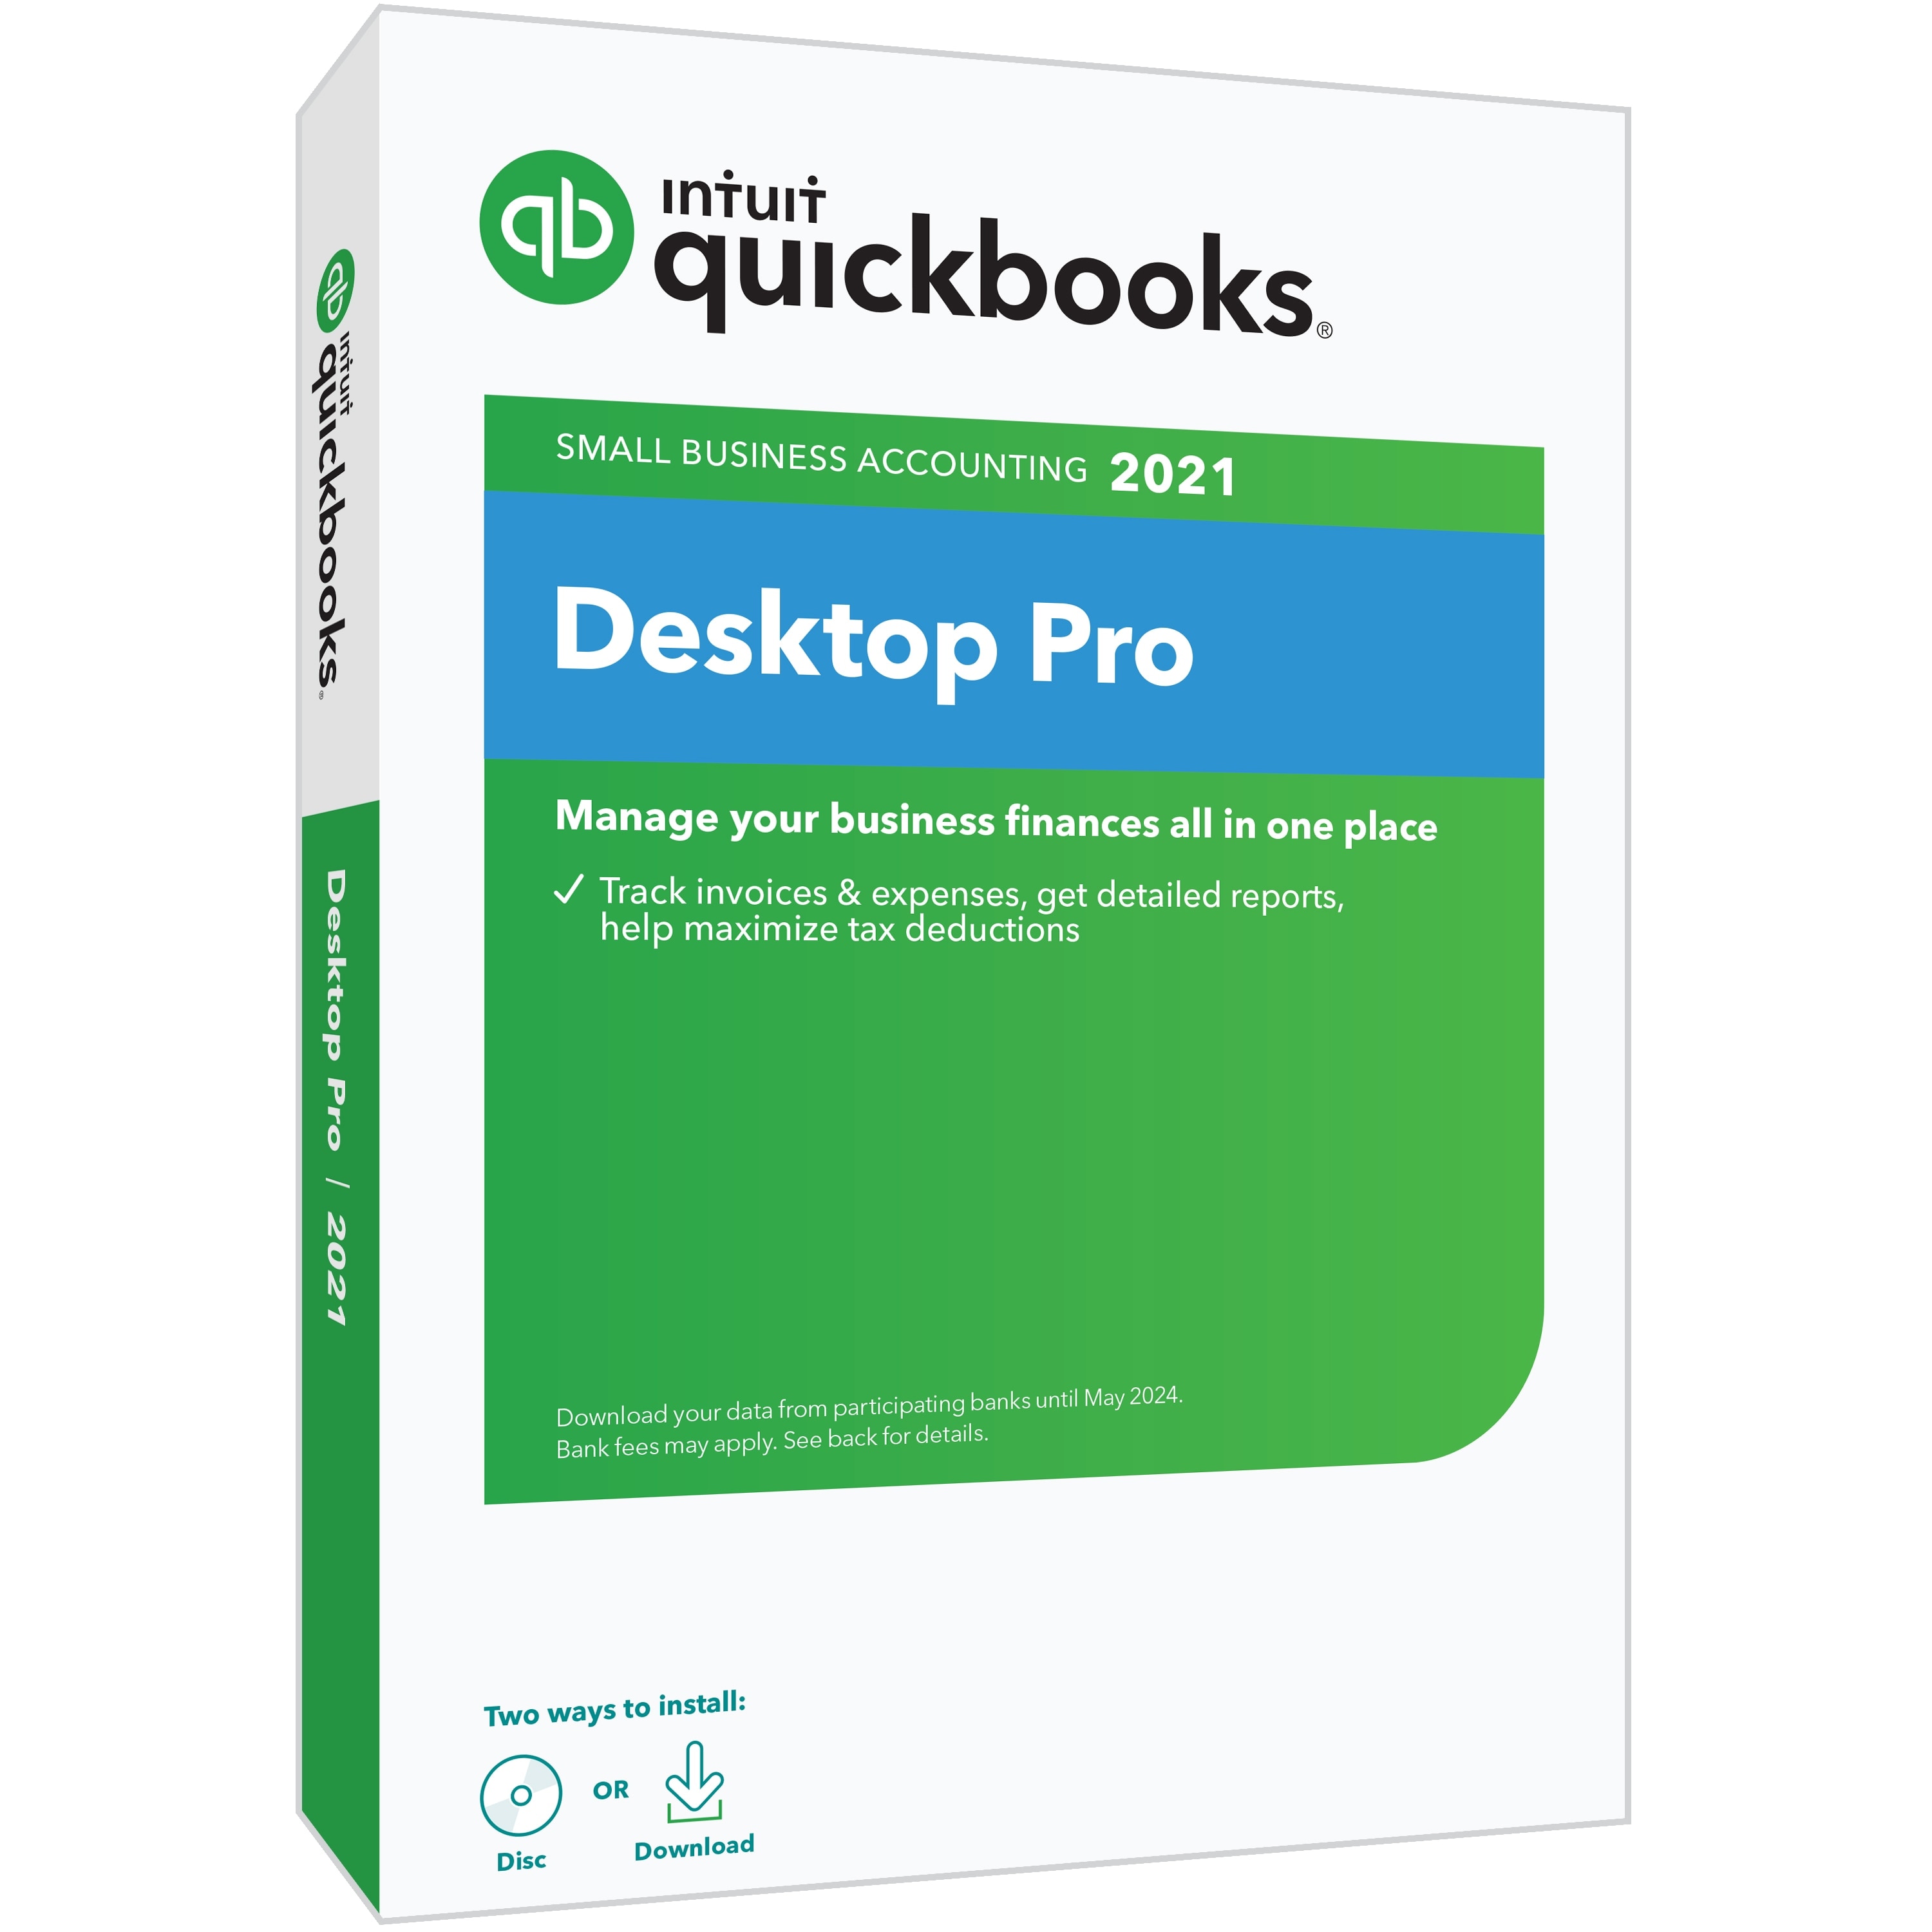 Download quickbooks desktop dragon ball xenoverse 2 download free